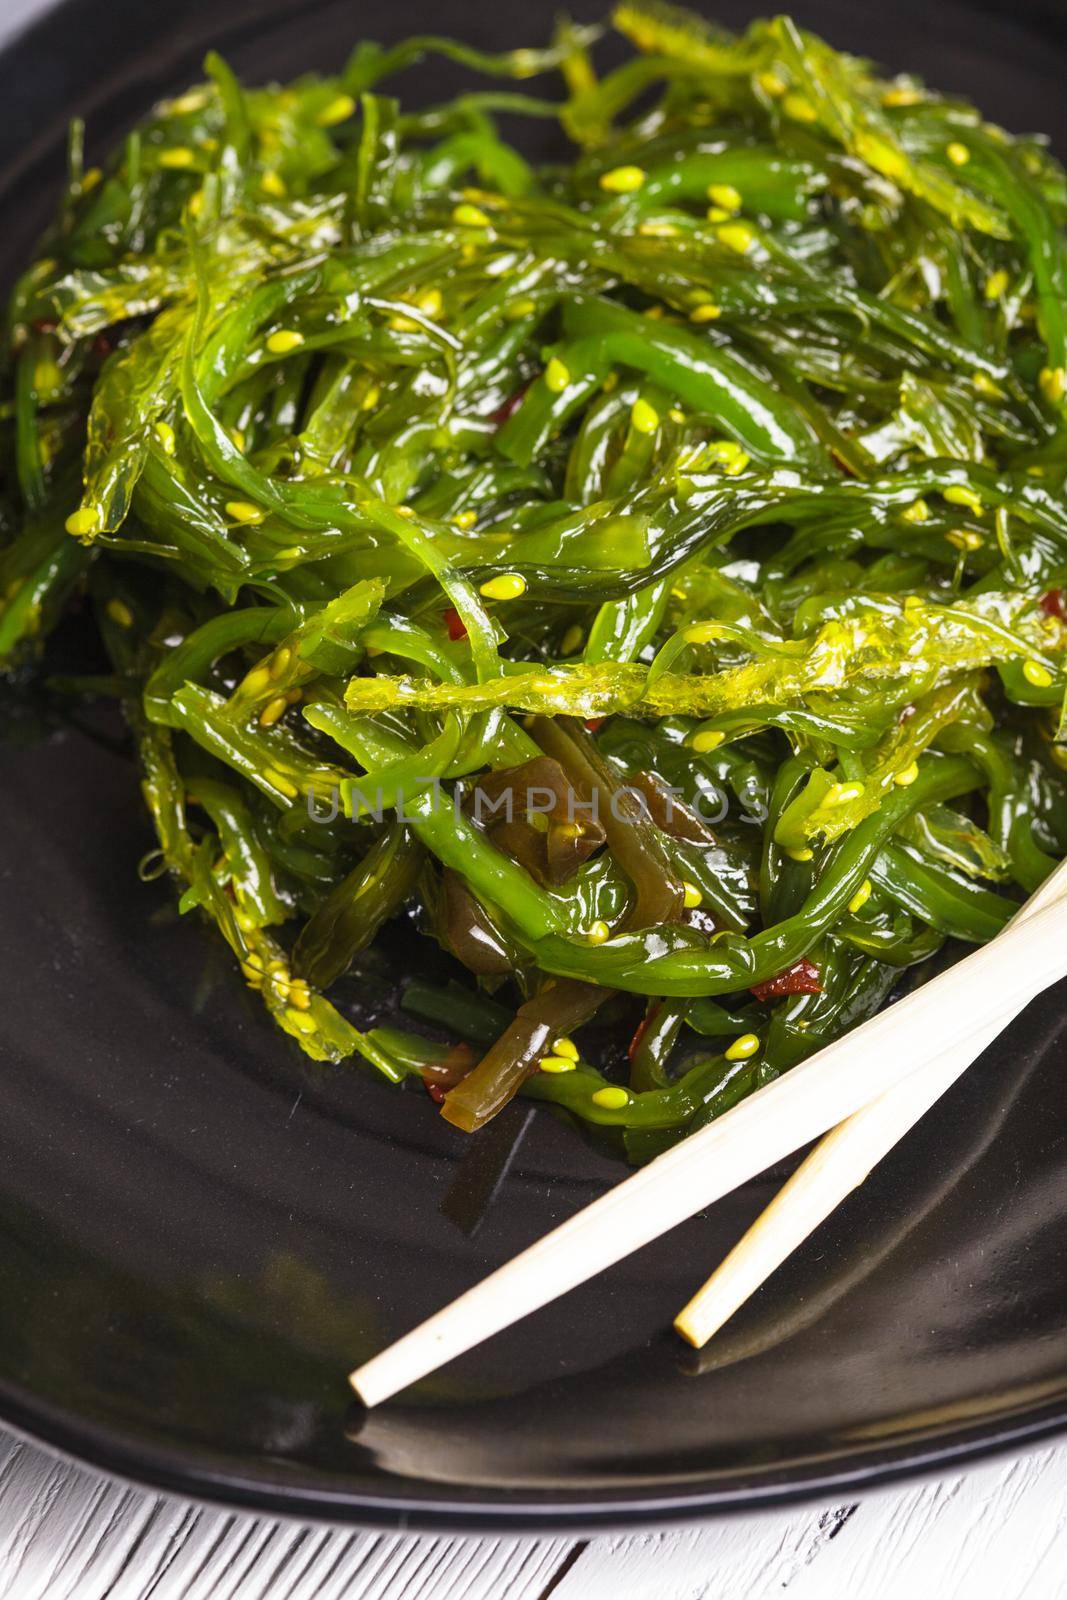 Seaweed salad - healthy sea food in the bowl